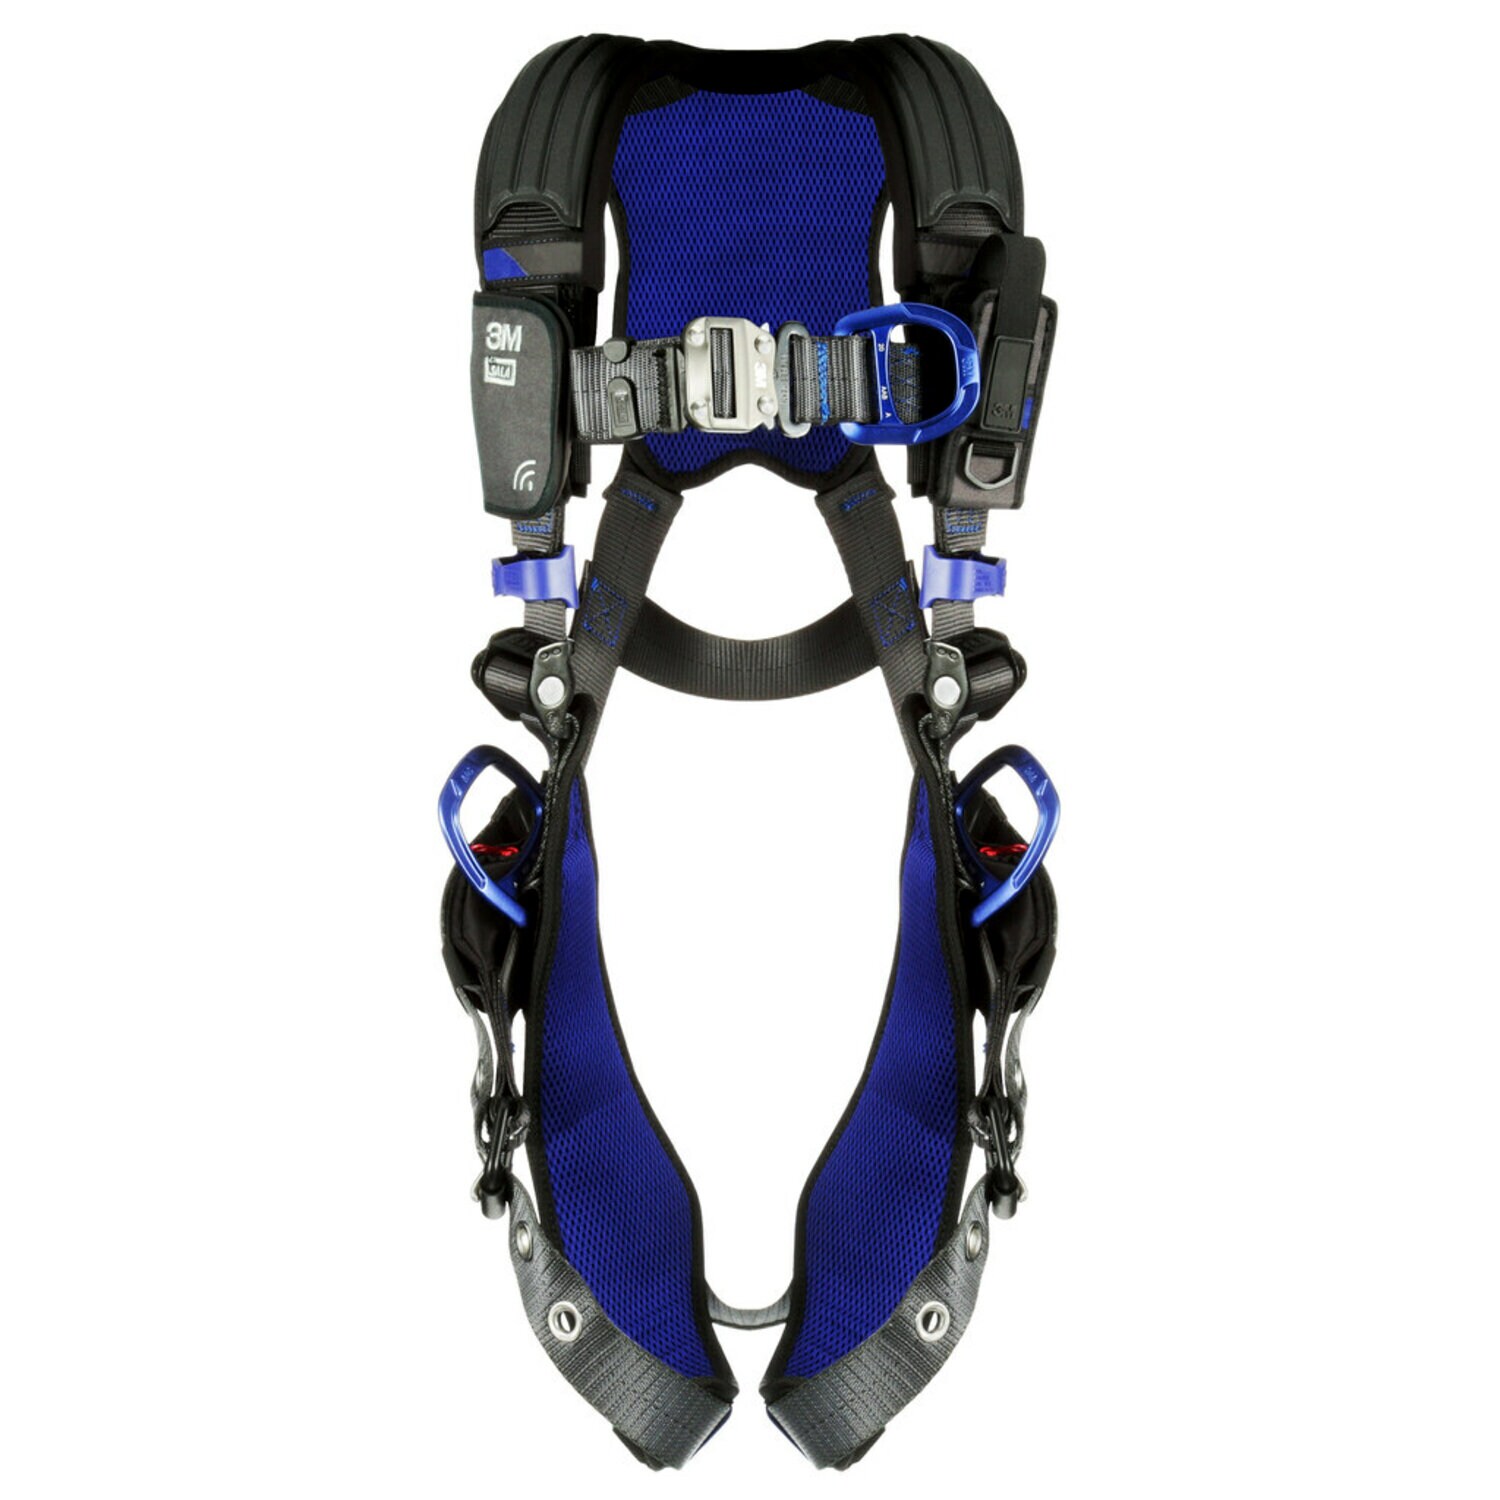 7012816355 - 3M DBI-SALA ExoFit NEX Comfort Vest Climbing/Positioning Safety Harness 1113423, X-Large